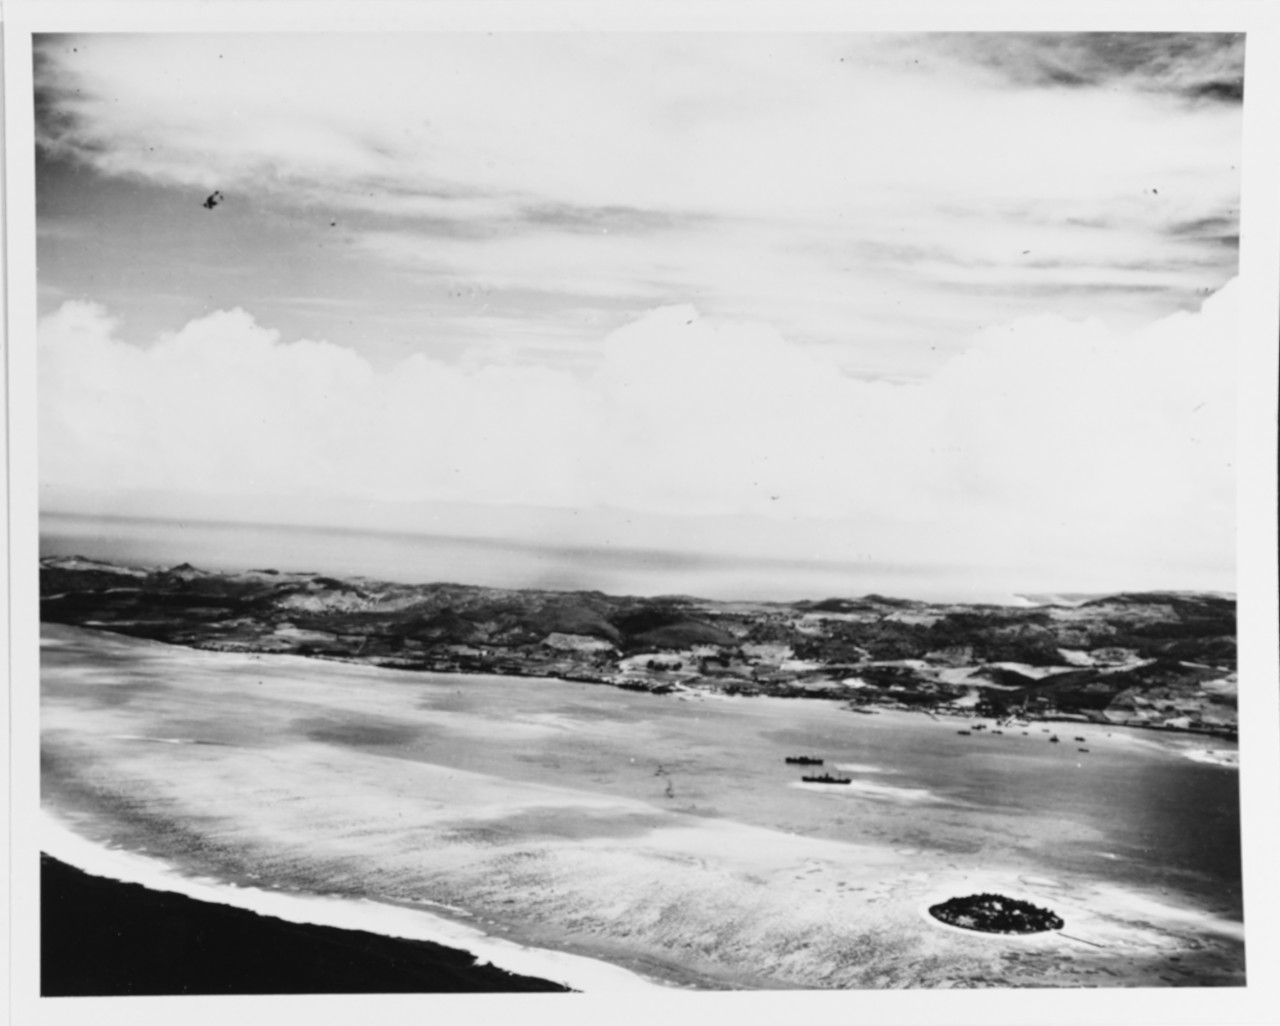 Marianas Operation, June 1944